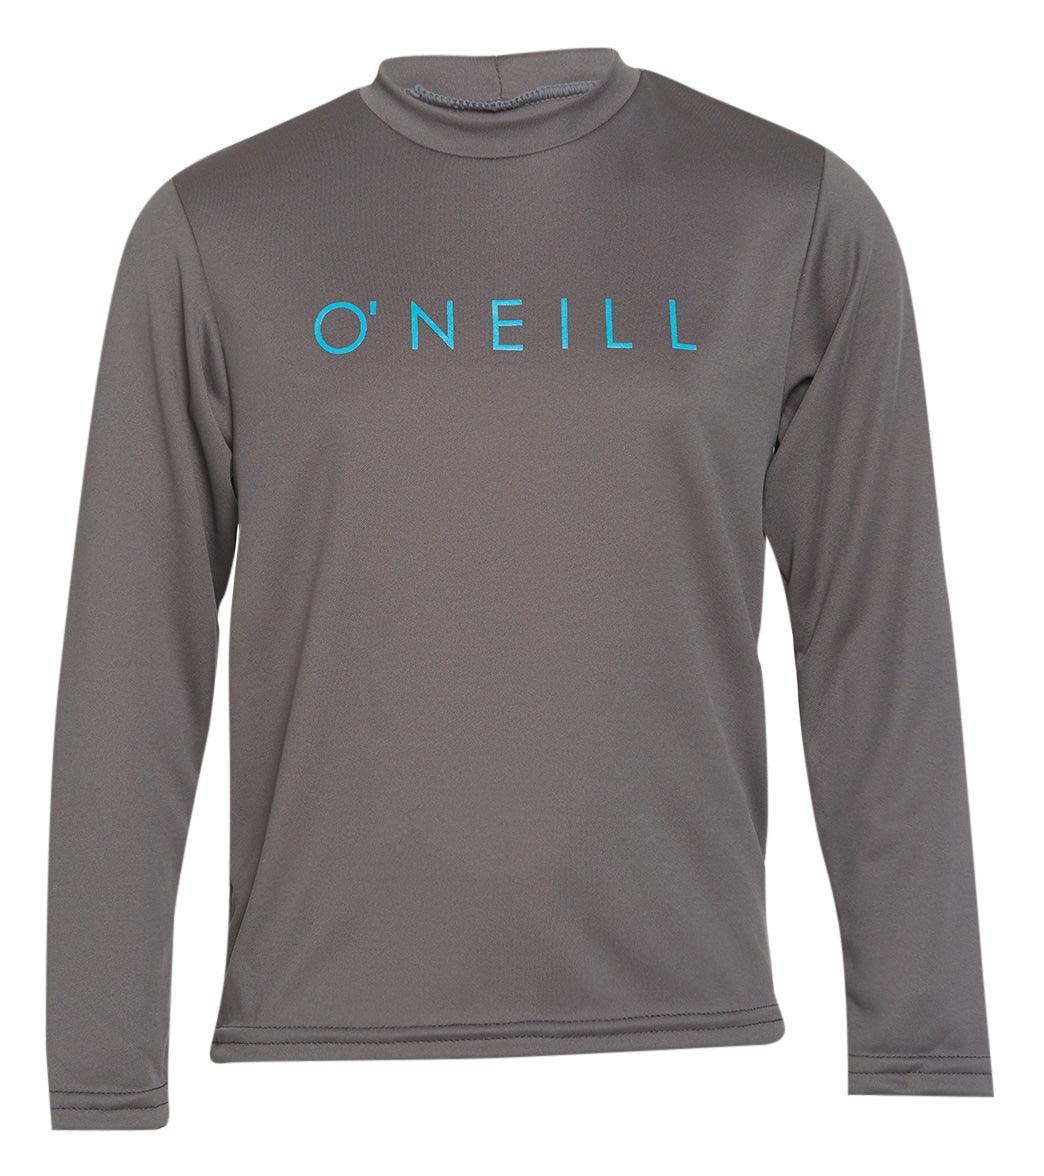 O'neill Youth Basic Upf 30+ Long Sleeve Sun Shirt - Smoke 4 Polyester - Swimoutlet.com